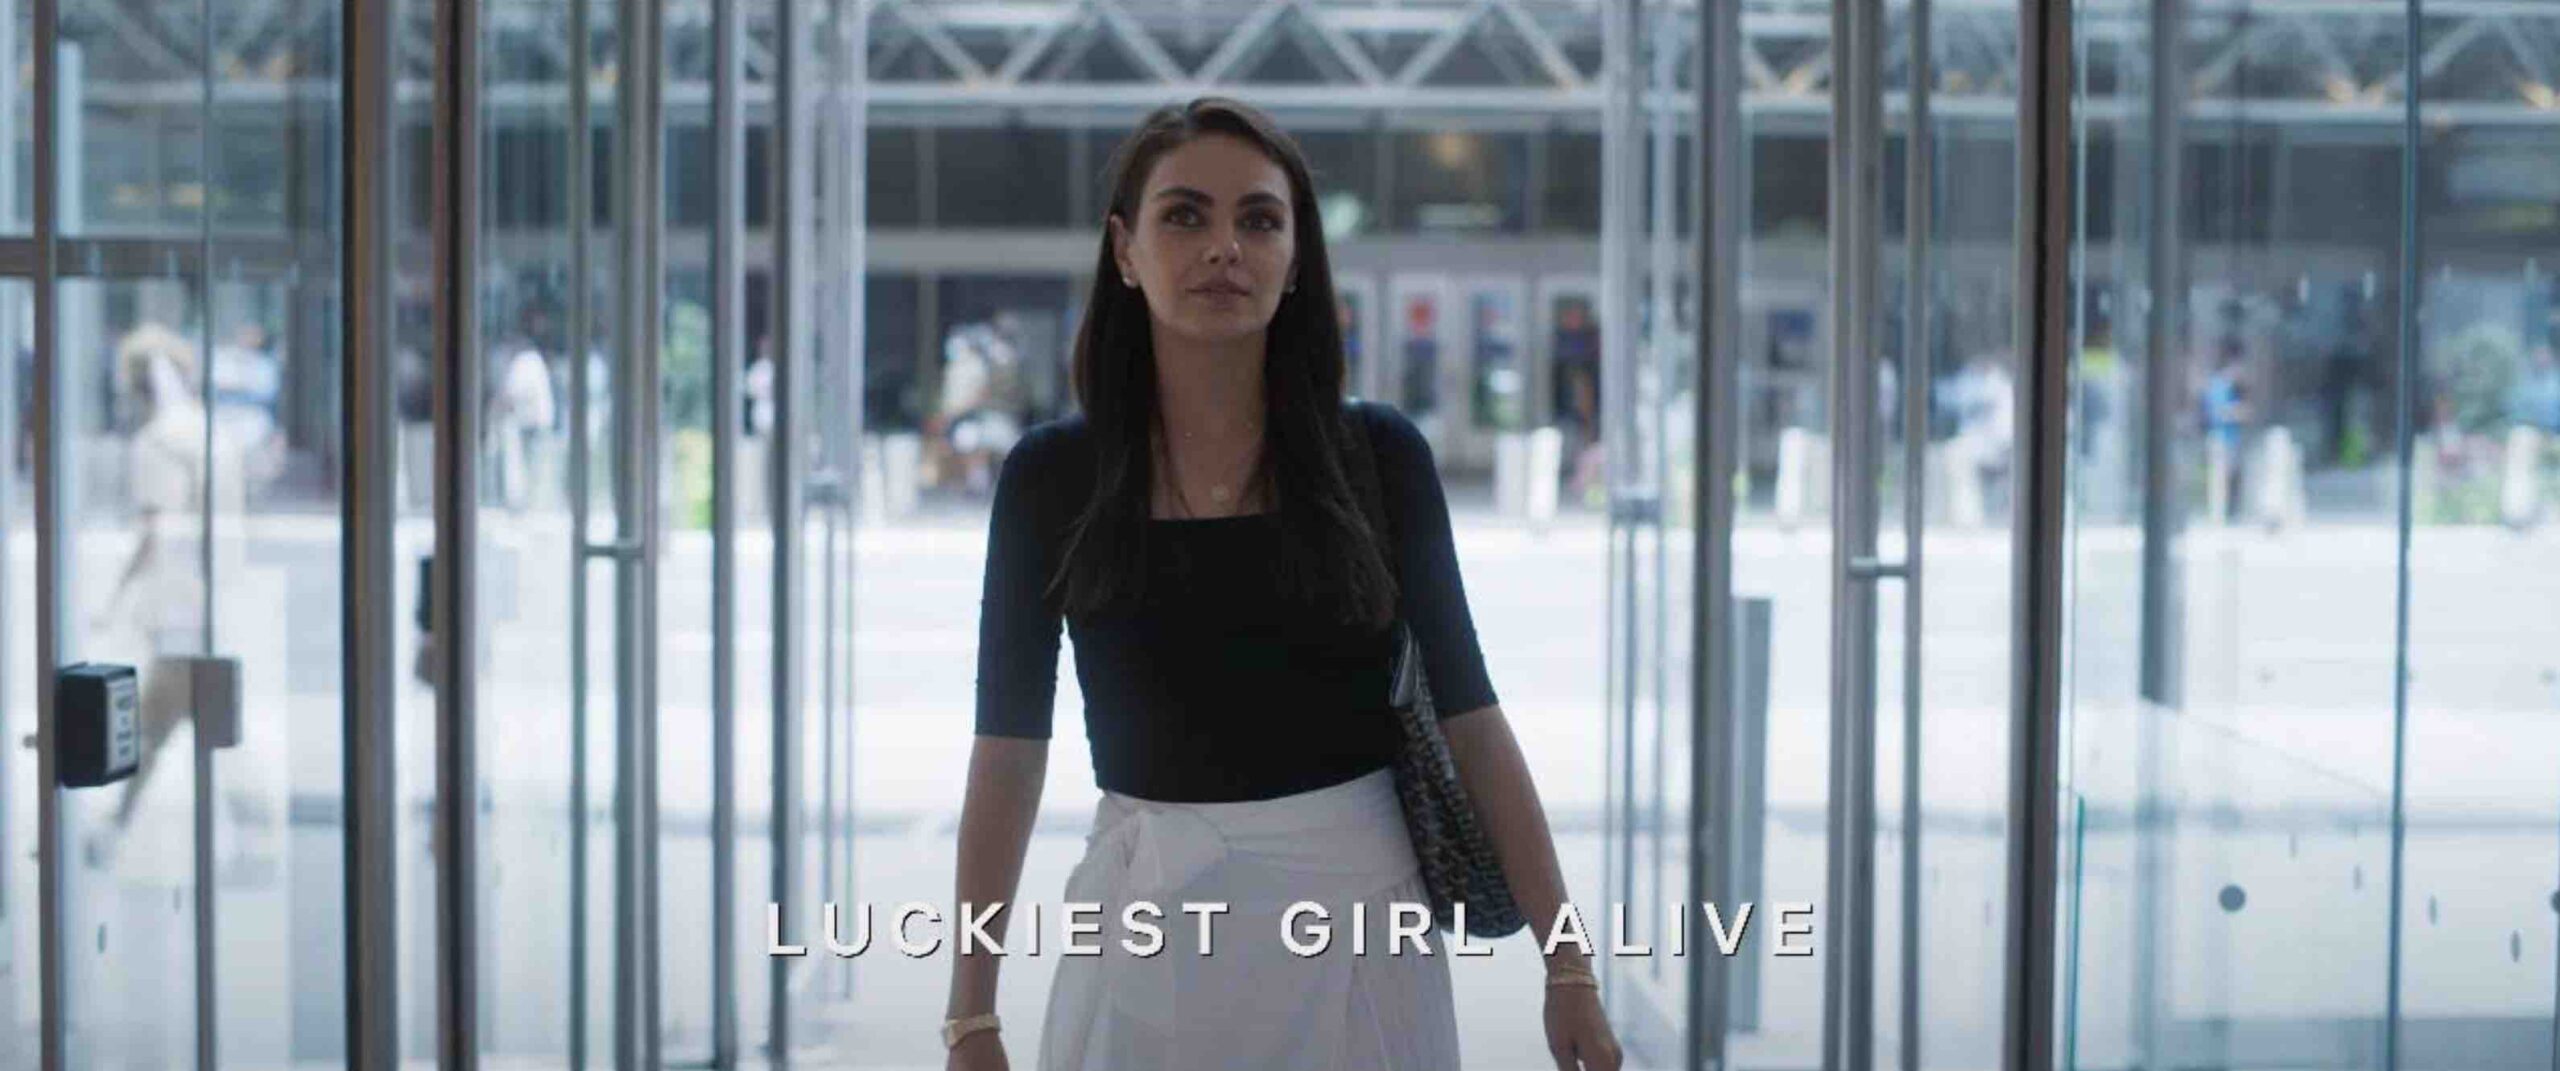 Luckiest-Girl-Alive